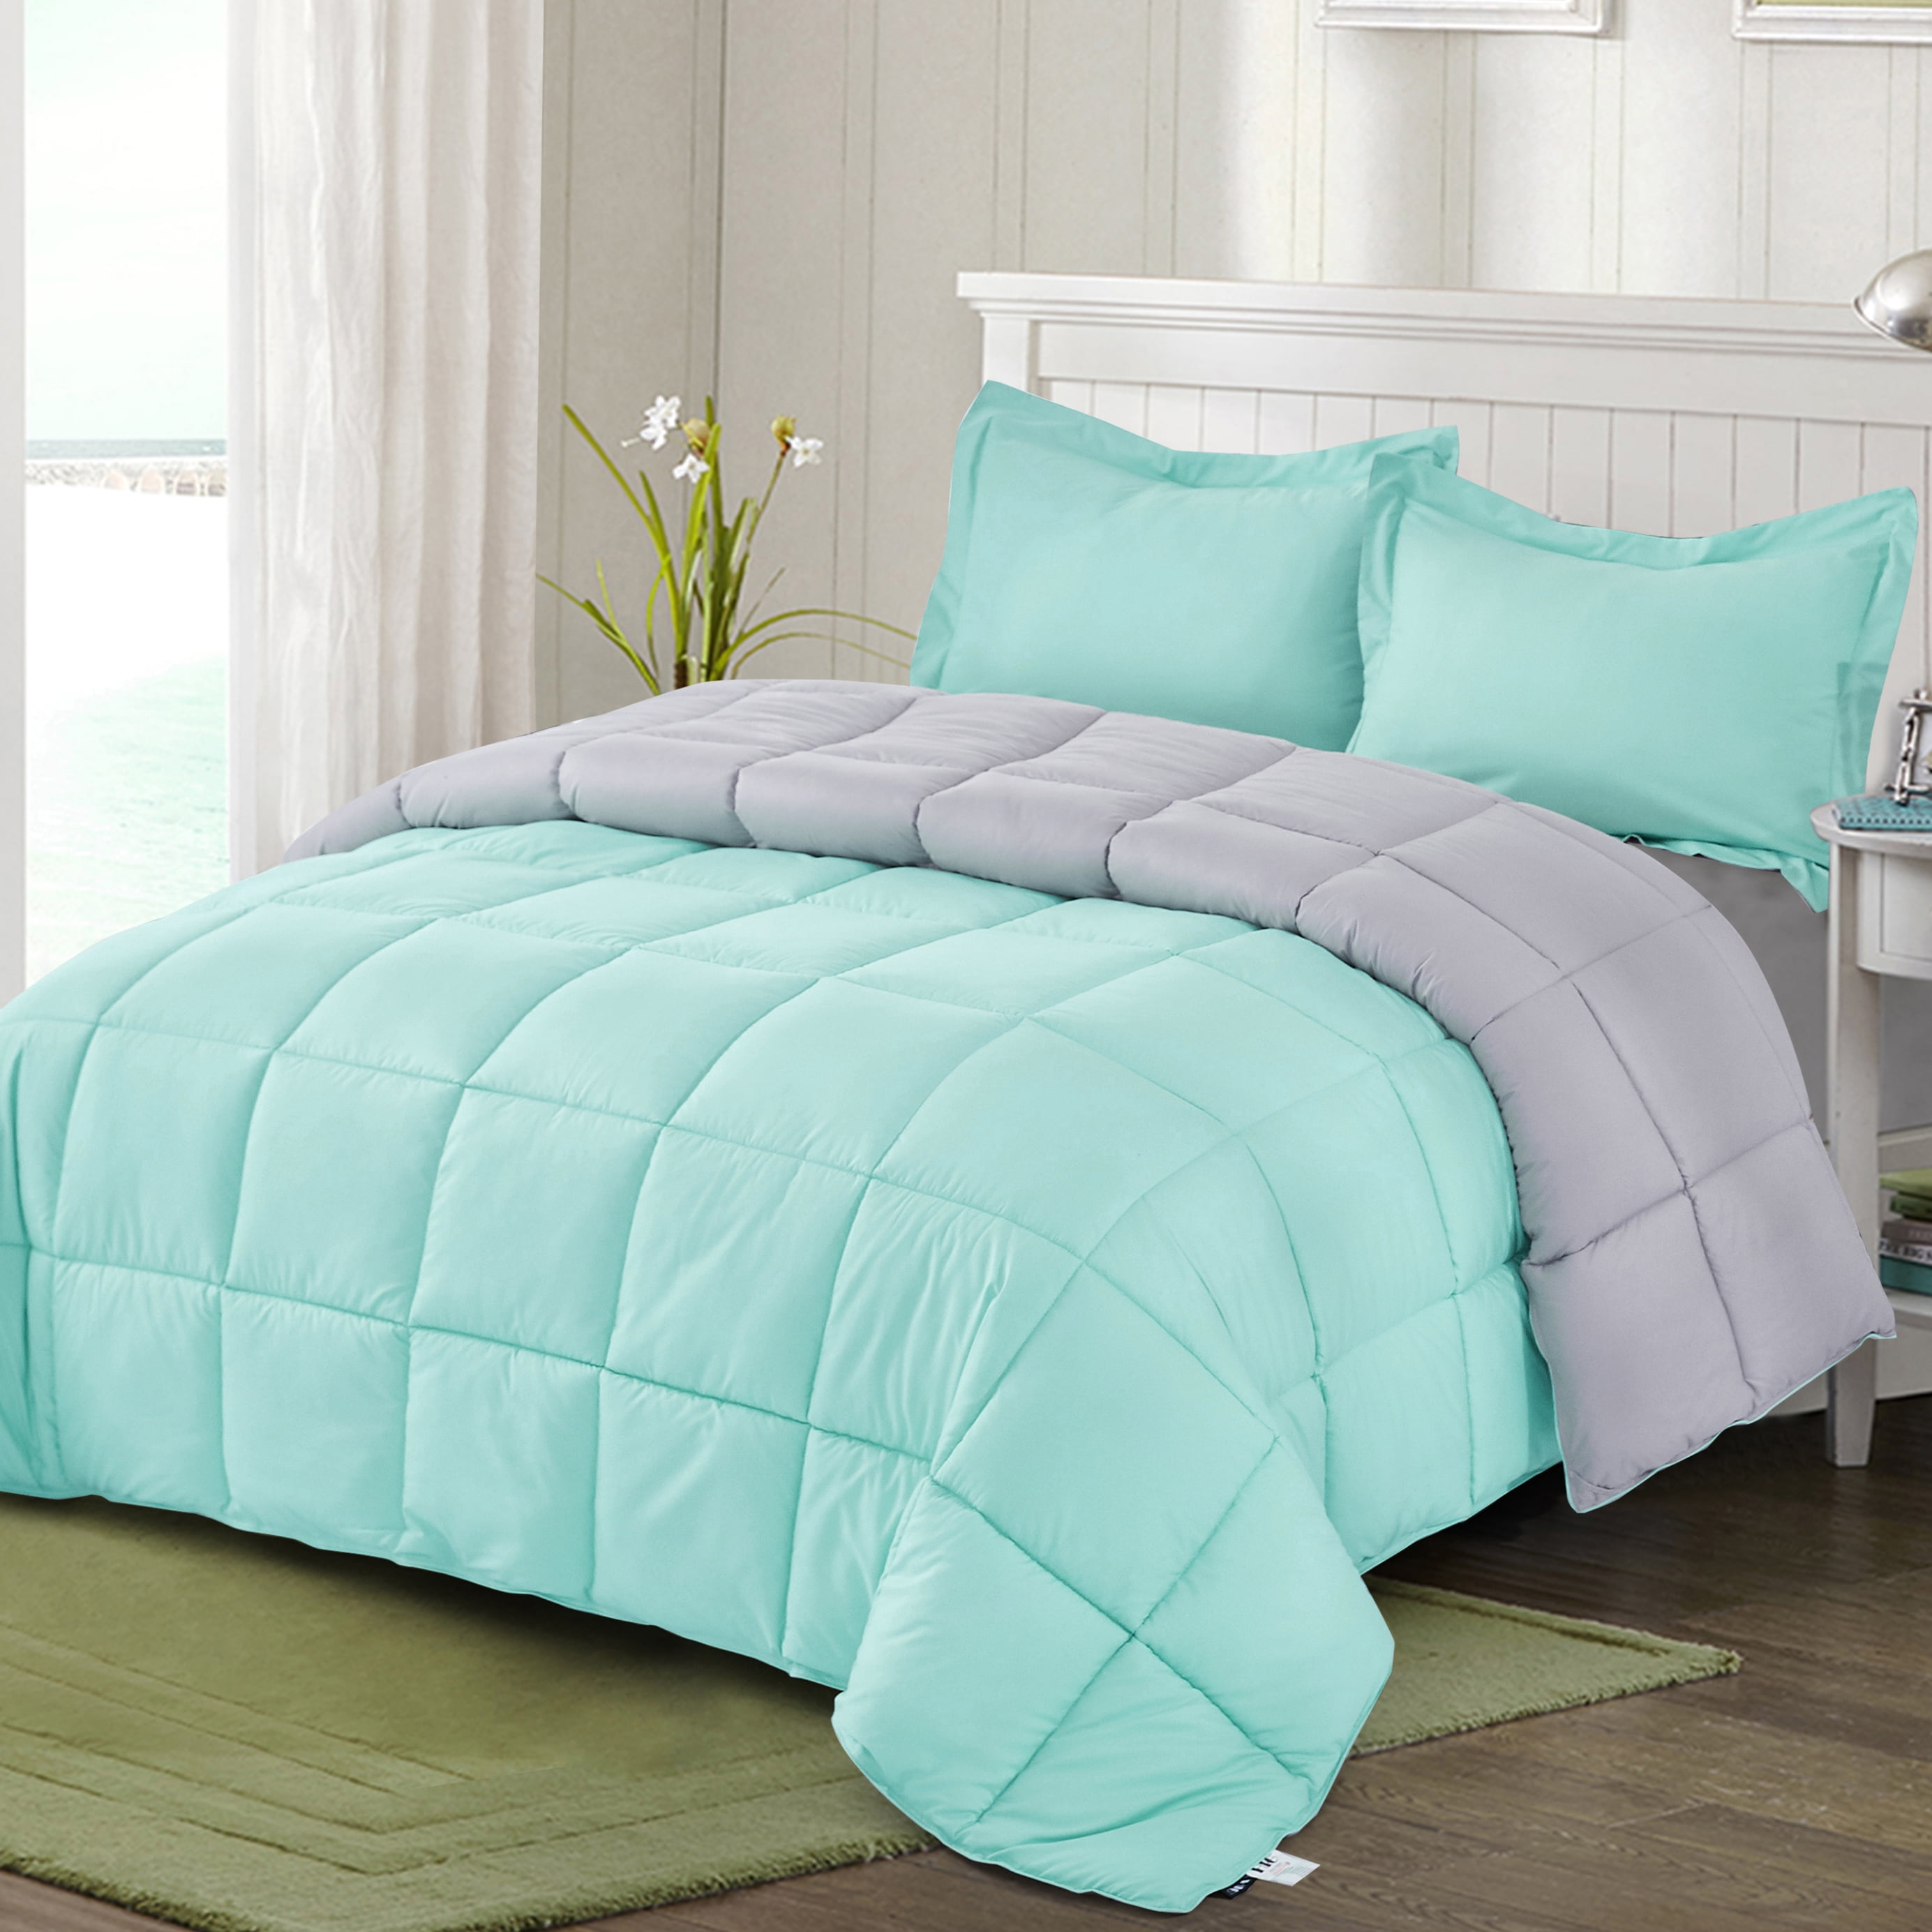 Details about   200 GSM Down Alternative Soft Comforter Egyptian Cotton Aqua Blue Solid US Sizes 